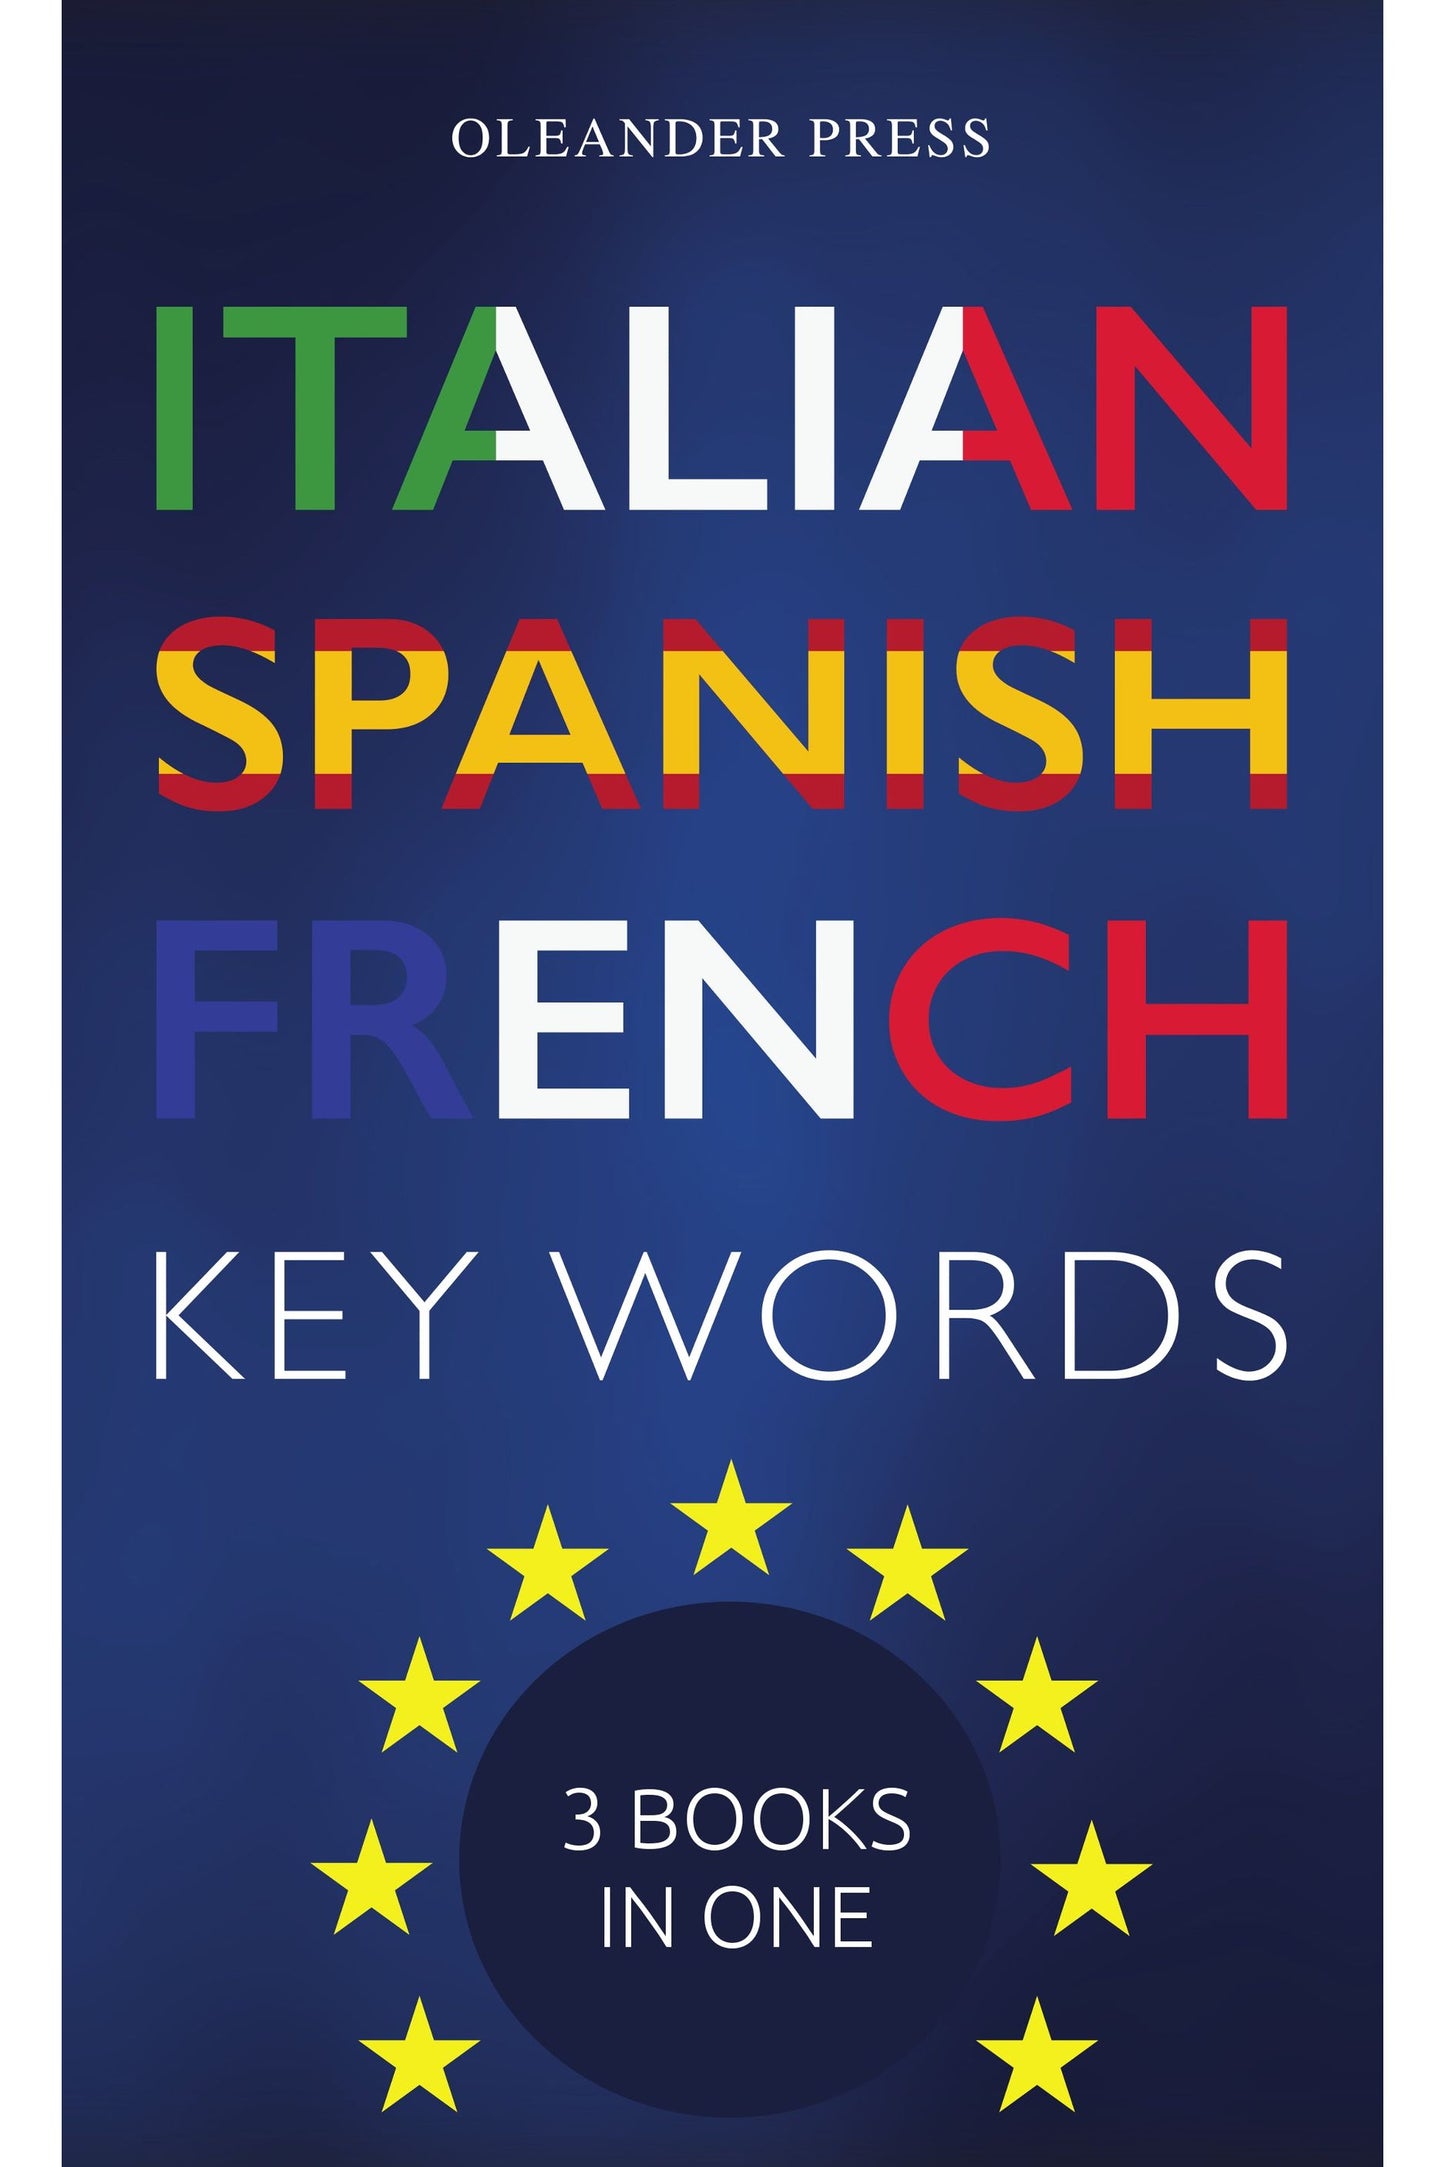 Italian Spanish French Key Words